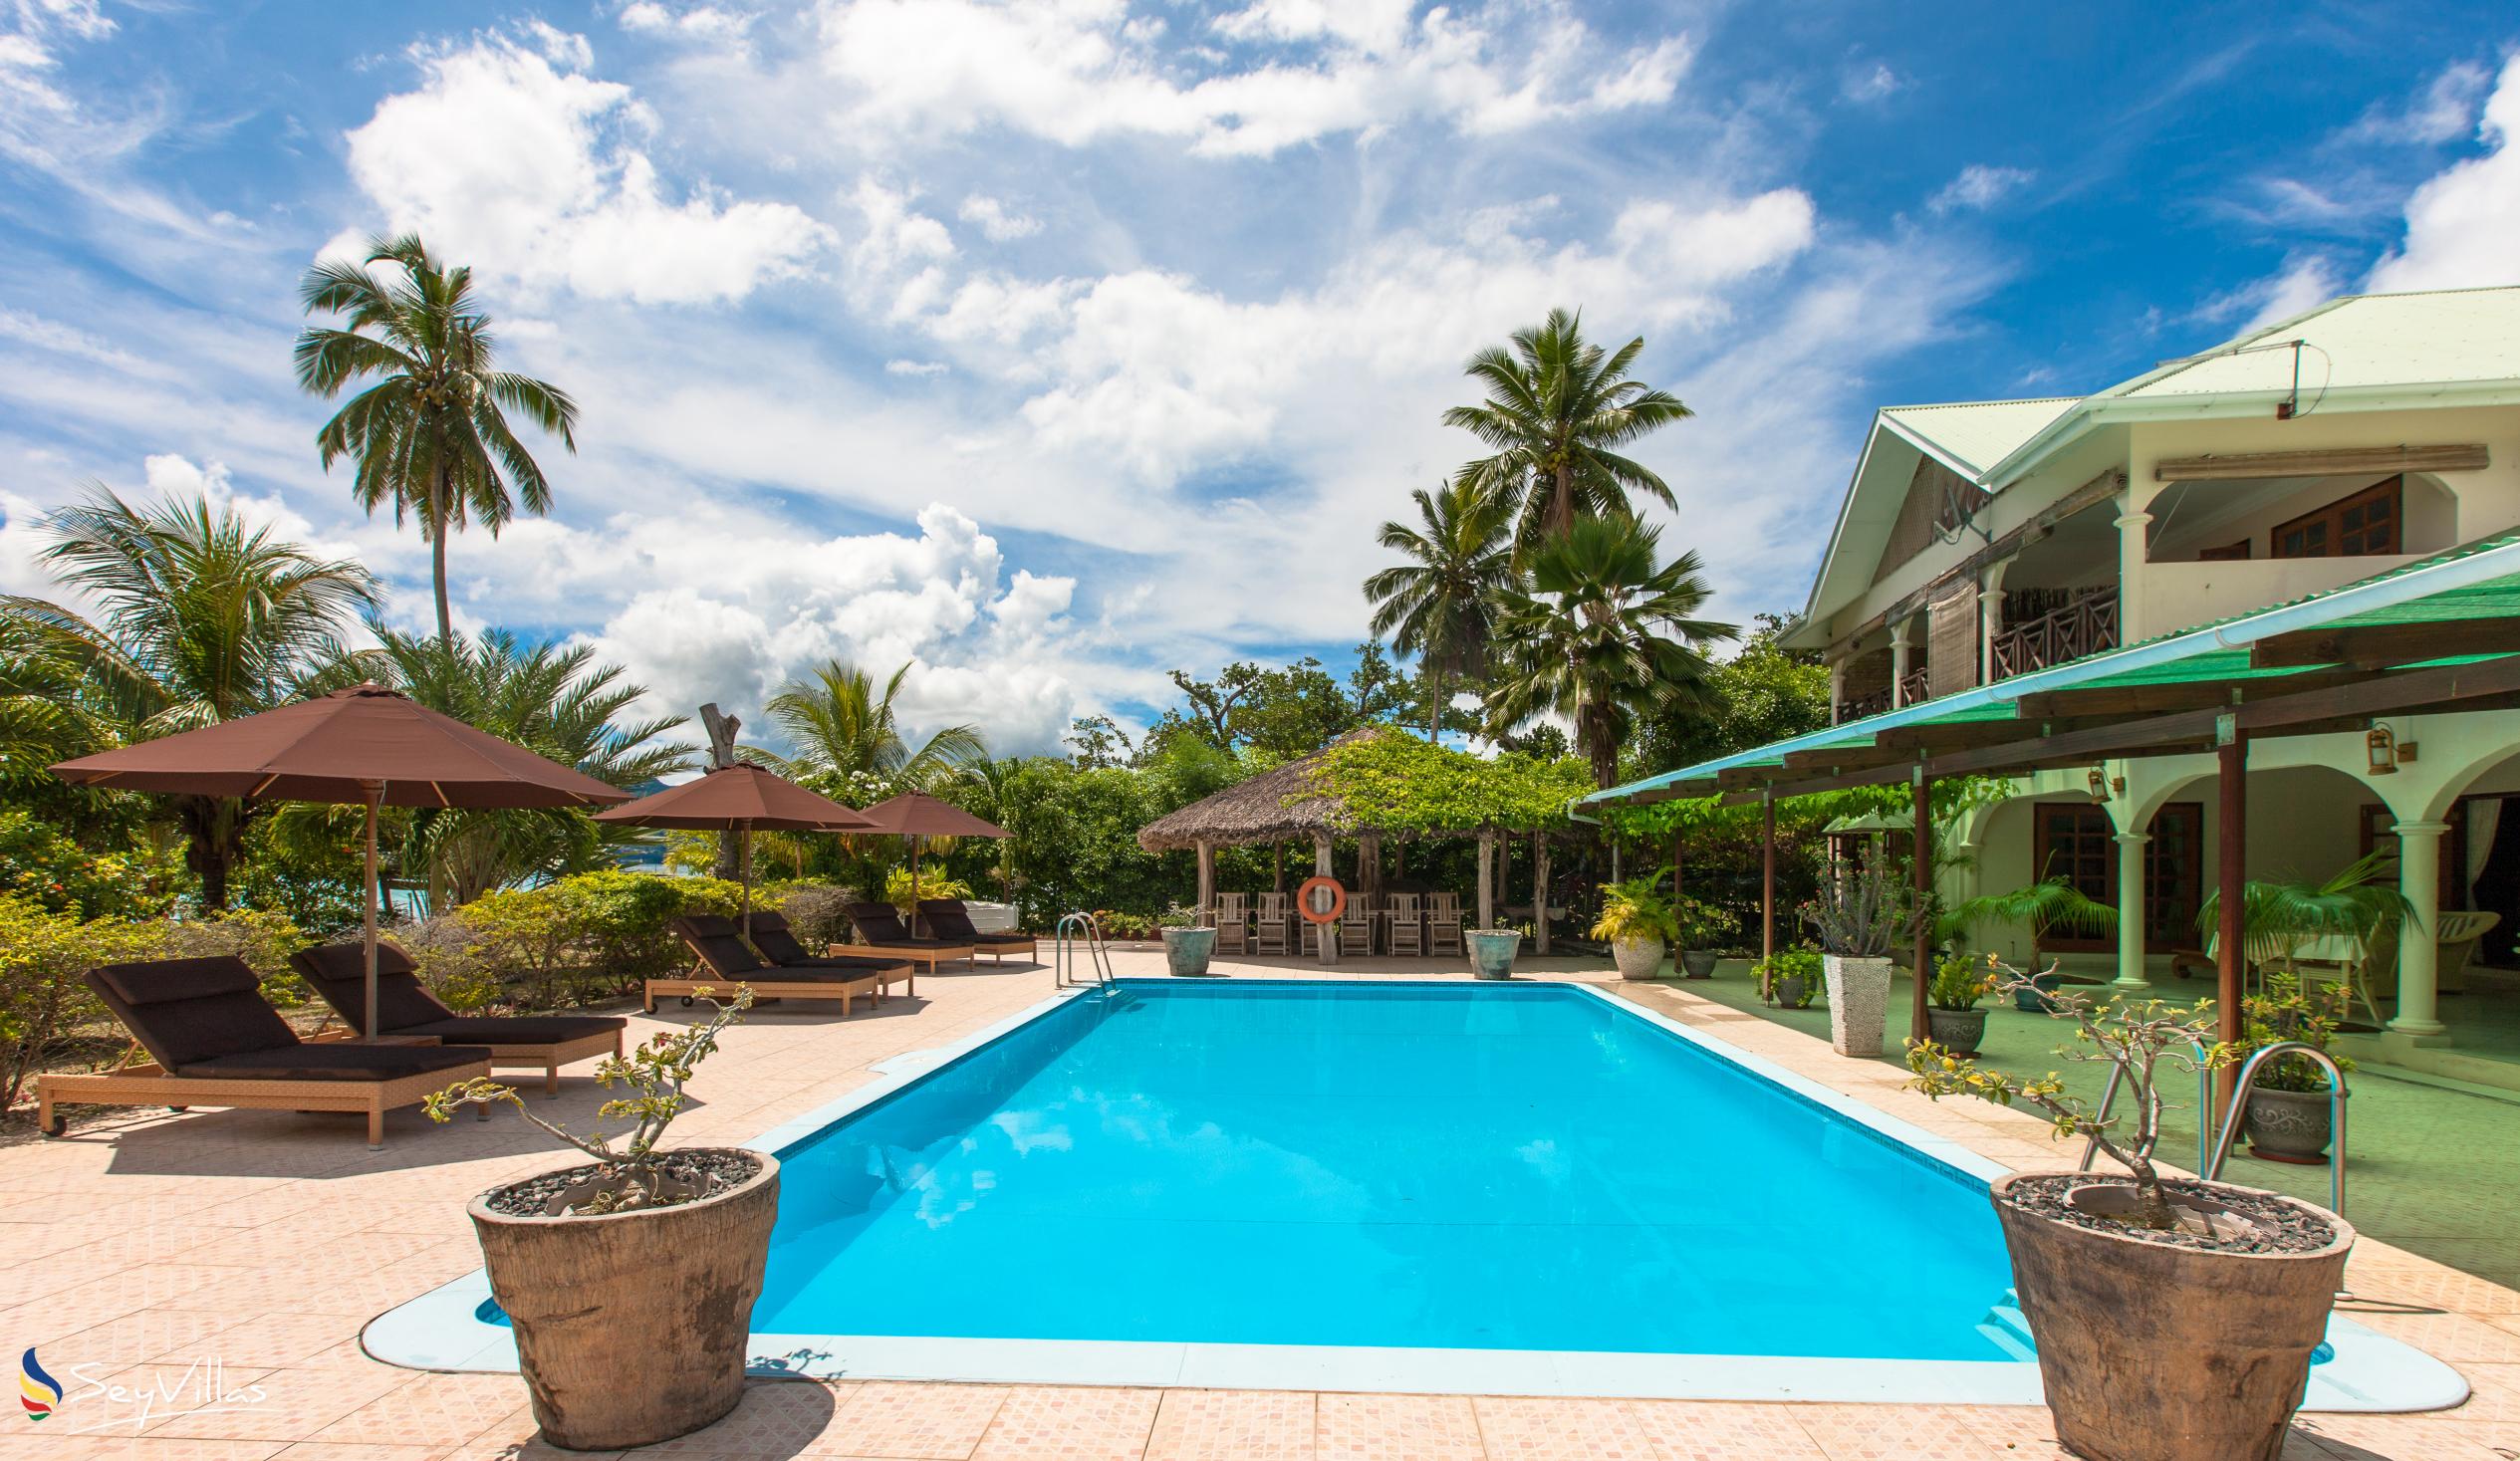 Photo 5: Villa de Cerf - Outdoor area - Cerf Island (Seychelles)